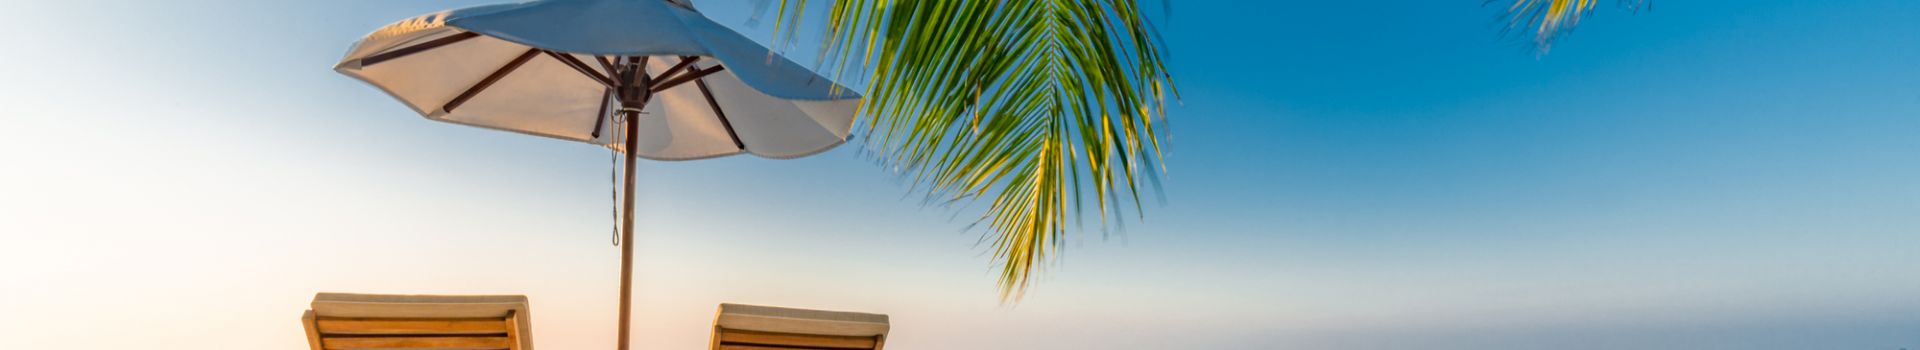 Top Beach Holiday Destinations  - Cassidy Travel Blog